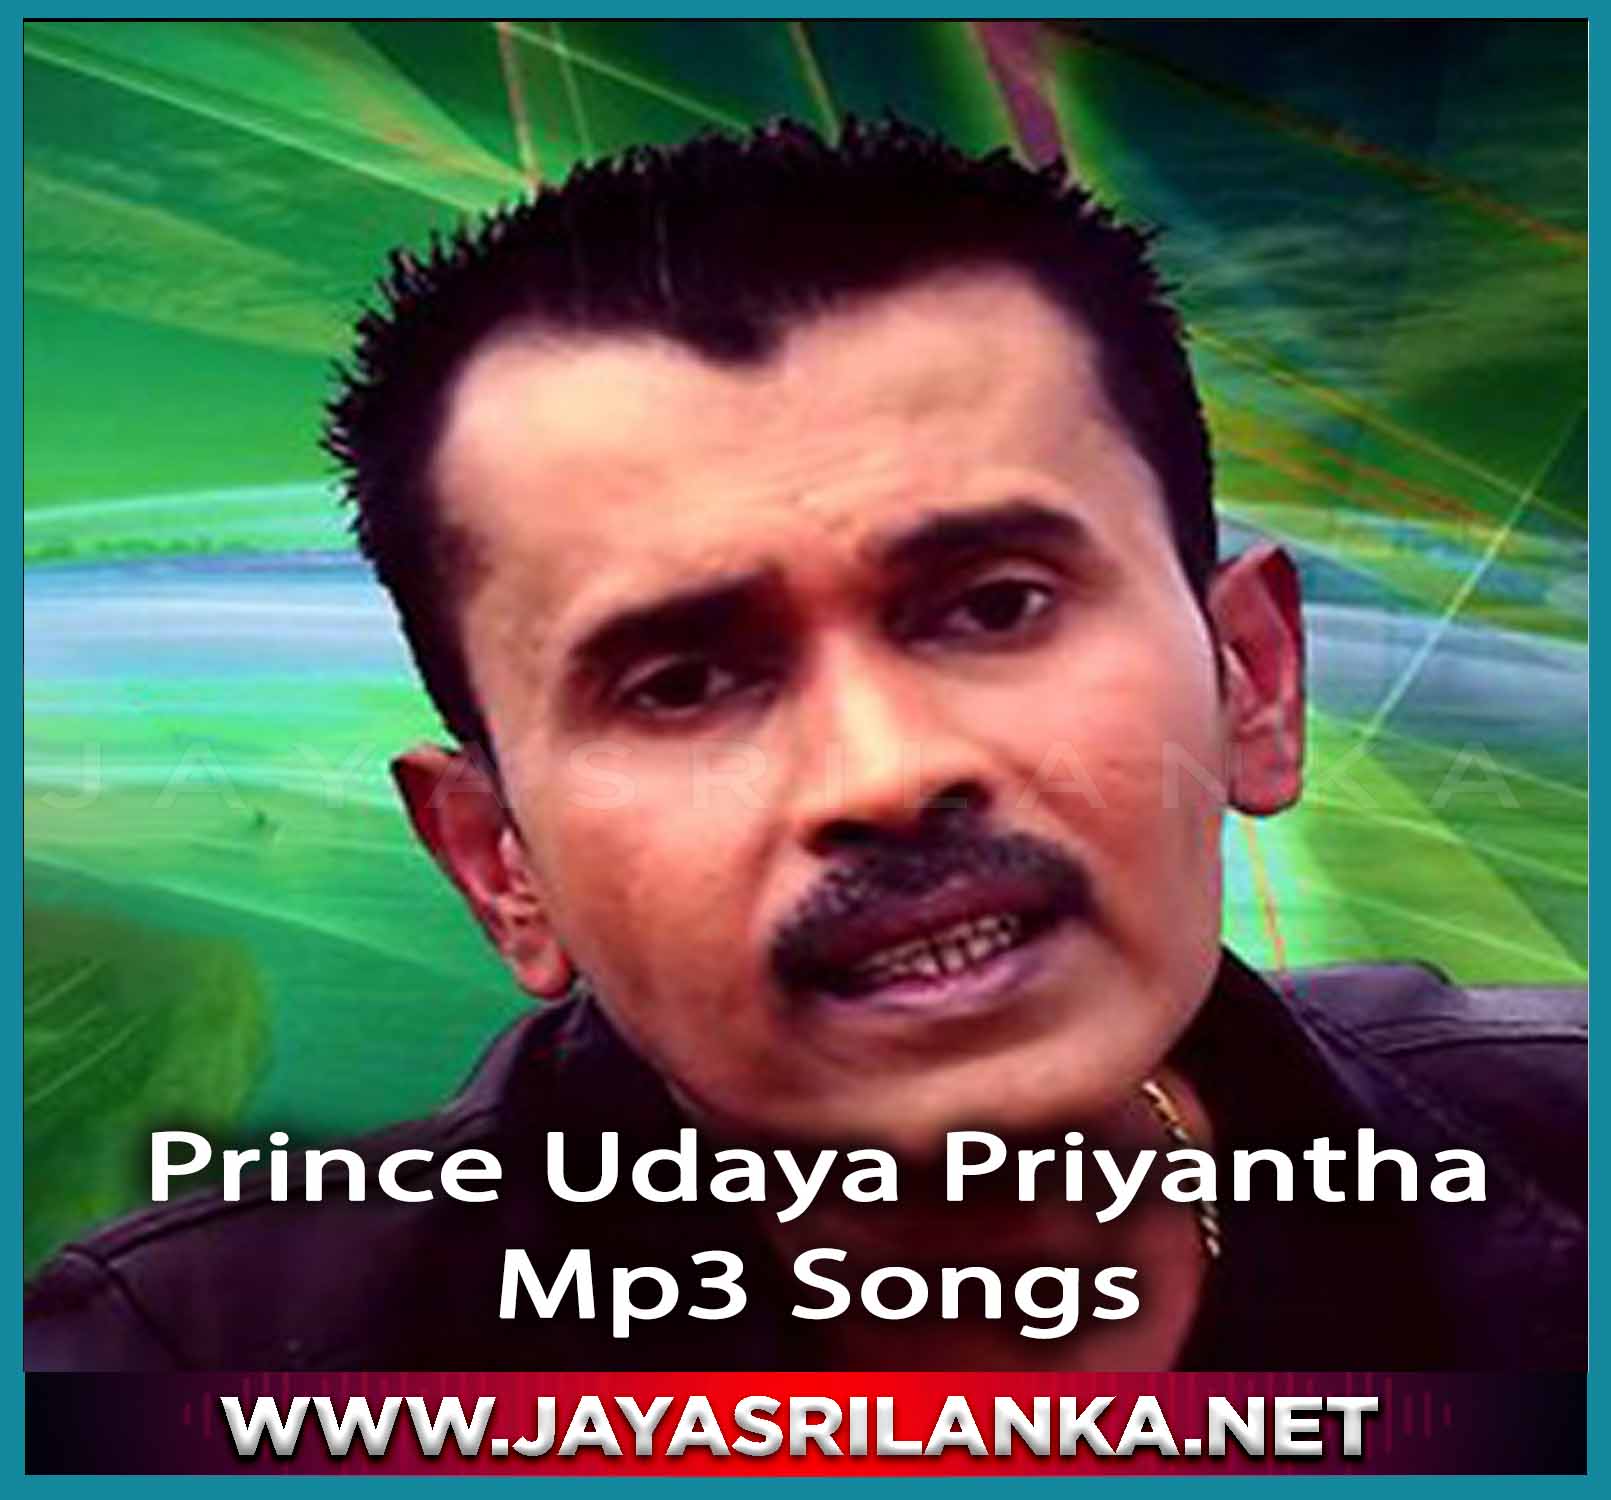 Kela Male Kohe Giyado - Prince Udaya Priyantha mp3 Image